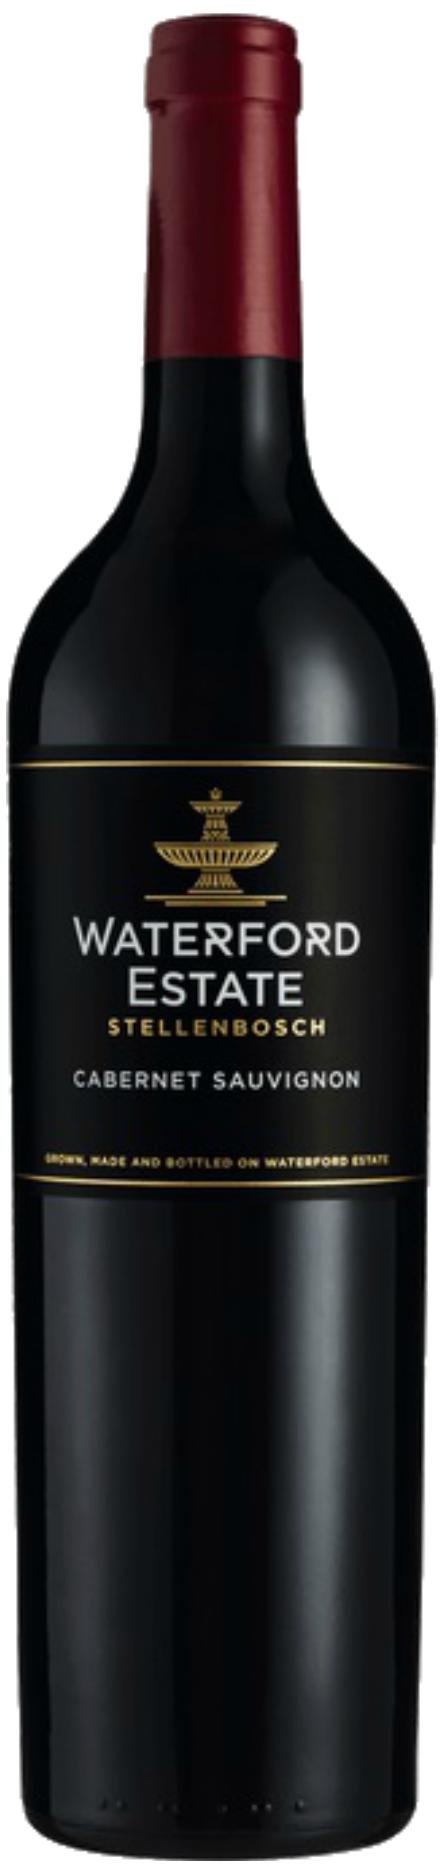 Waterford Cabernet Sauvignon 2018